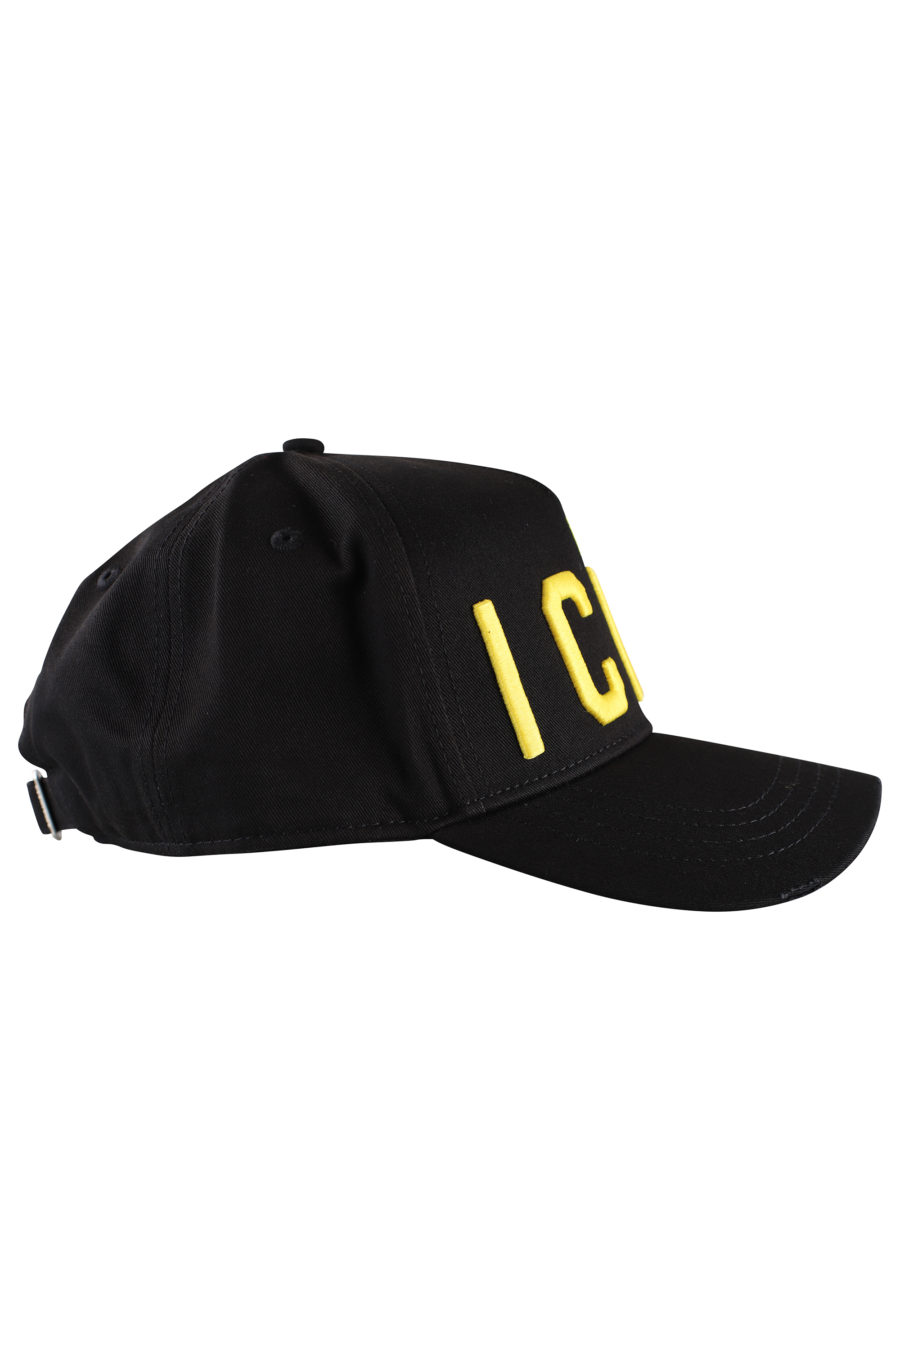 Adjustable black cap with yellow "icon" logo - IMG 9987